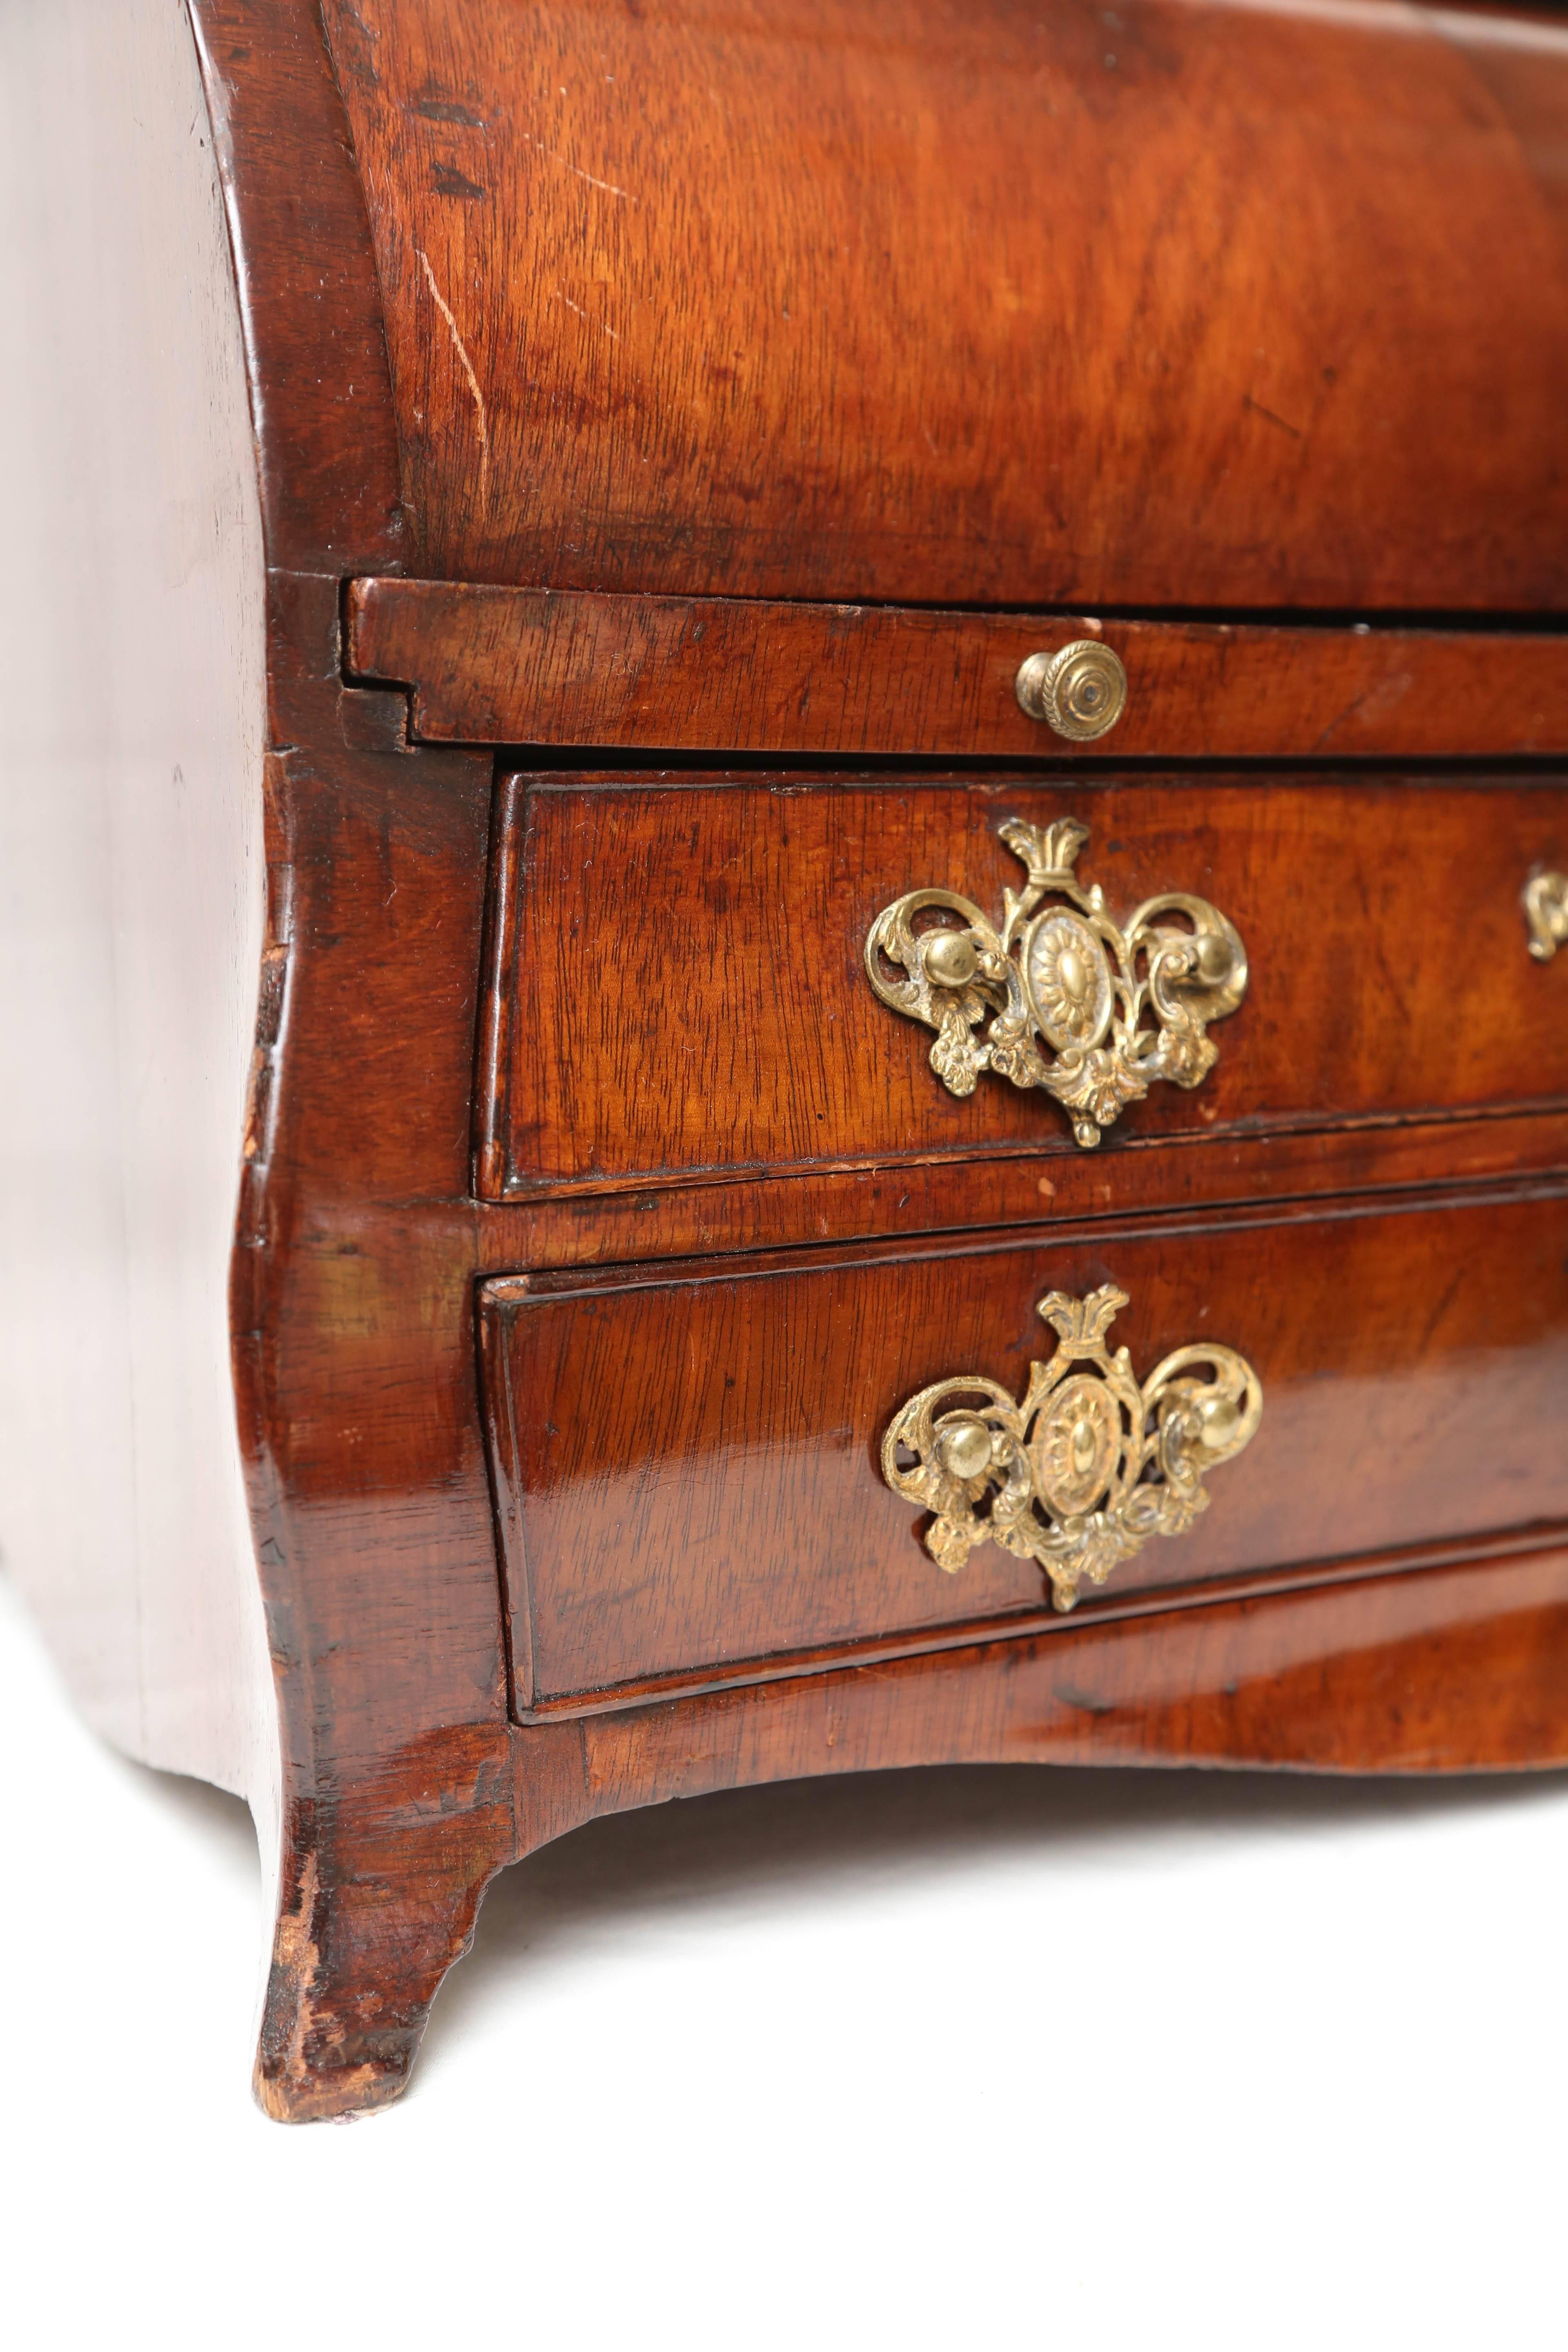 Mahogany Superb 19th Century Continental Miniature Desk or Jewel Box